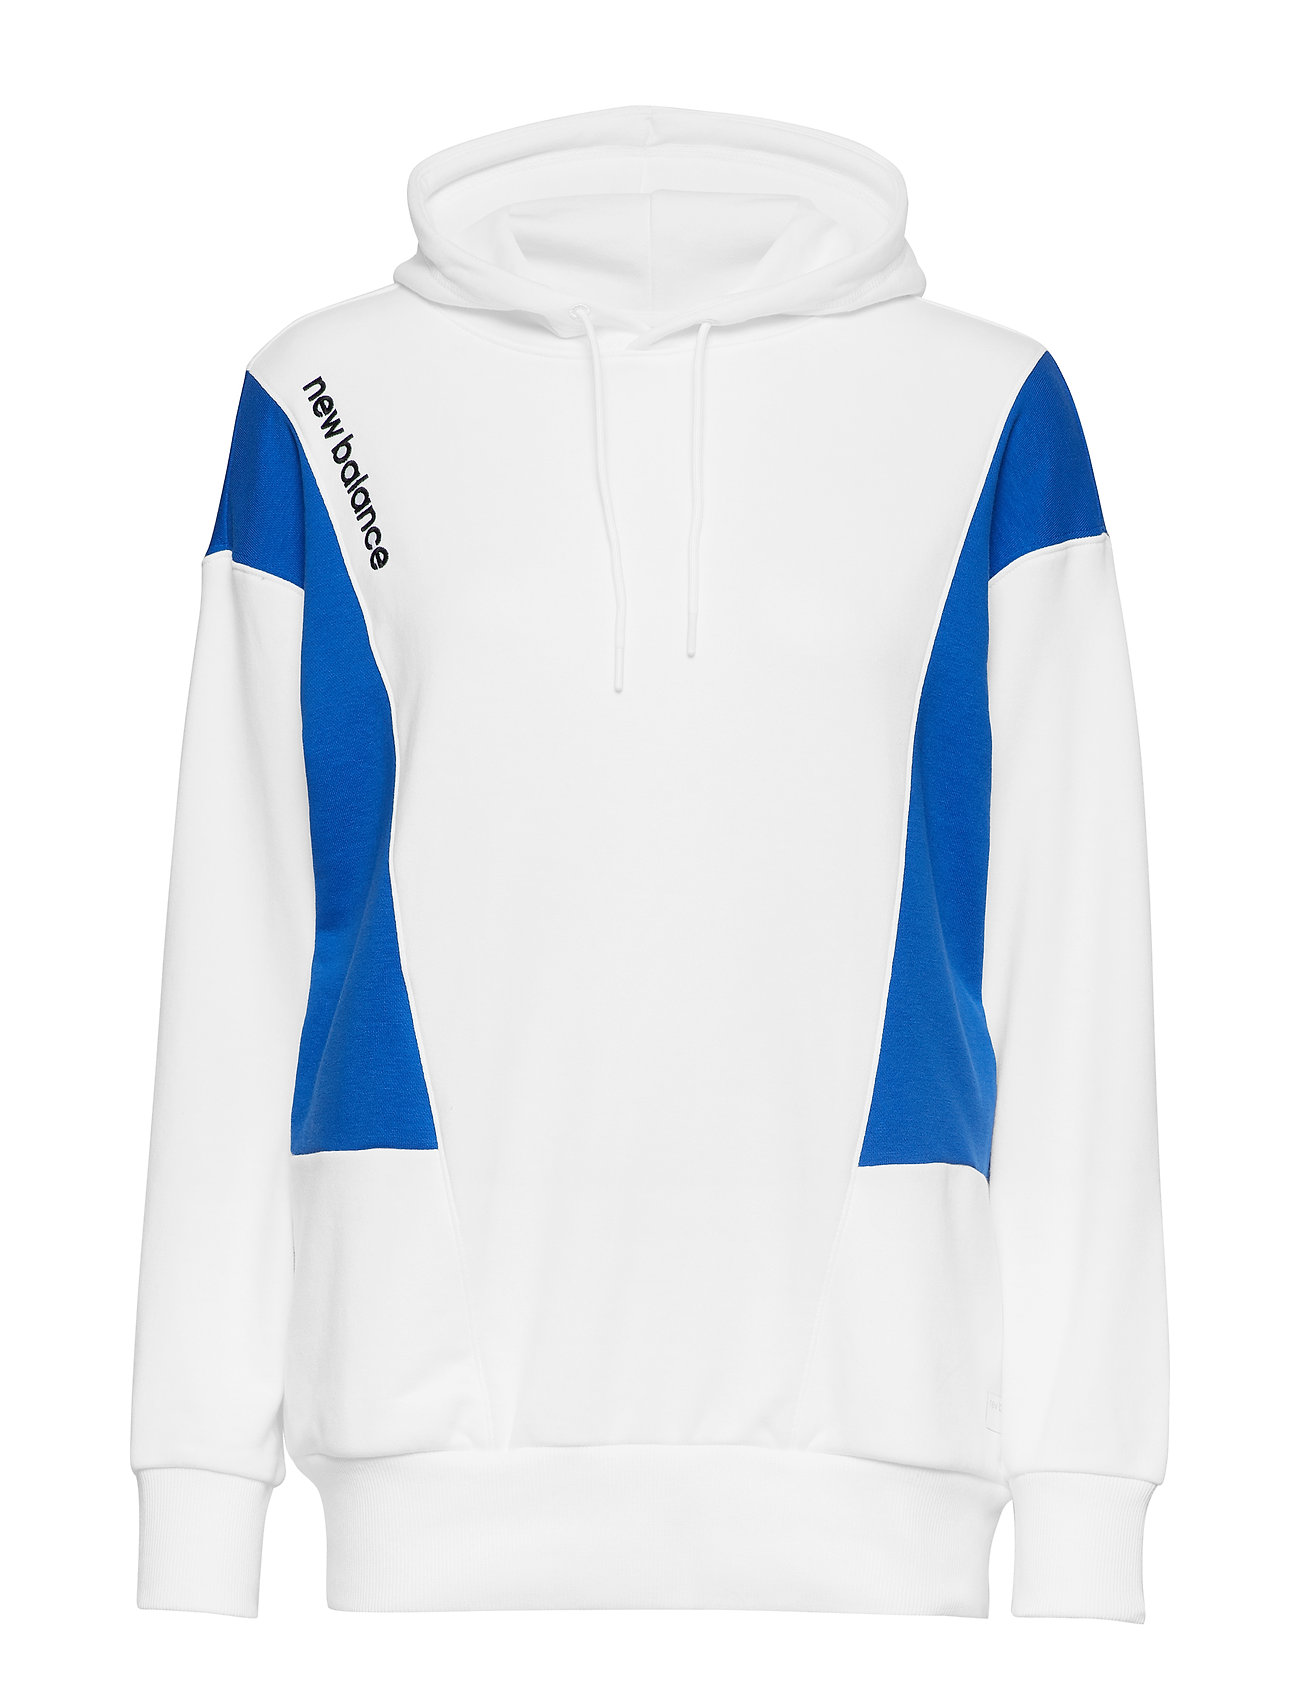 nb athletics classic hoodie